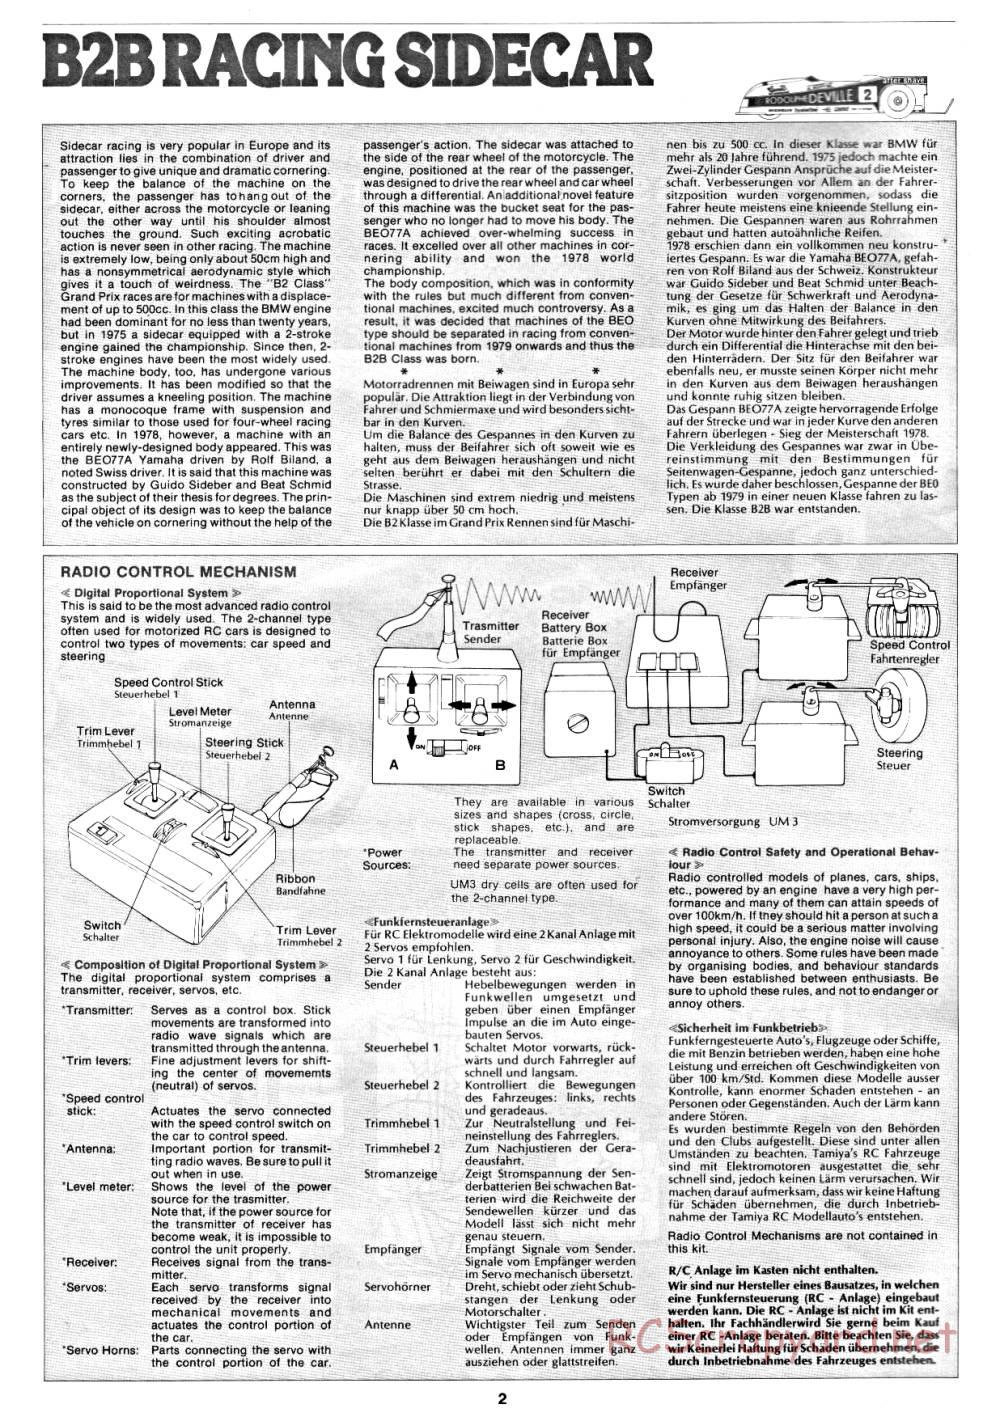 Tamiya - B2B Racing Sidecar - 58017 - Manual - Page 2